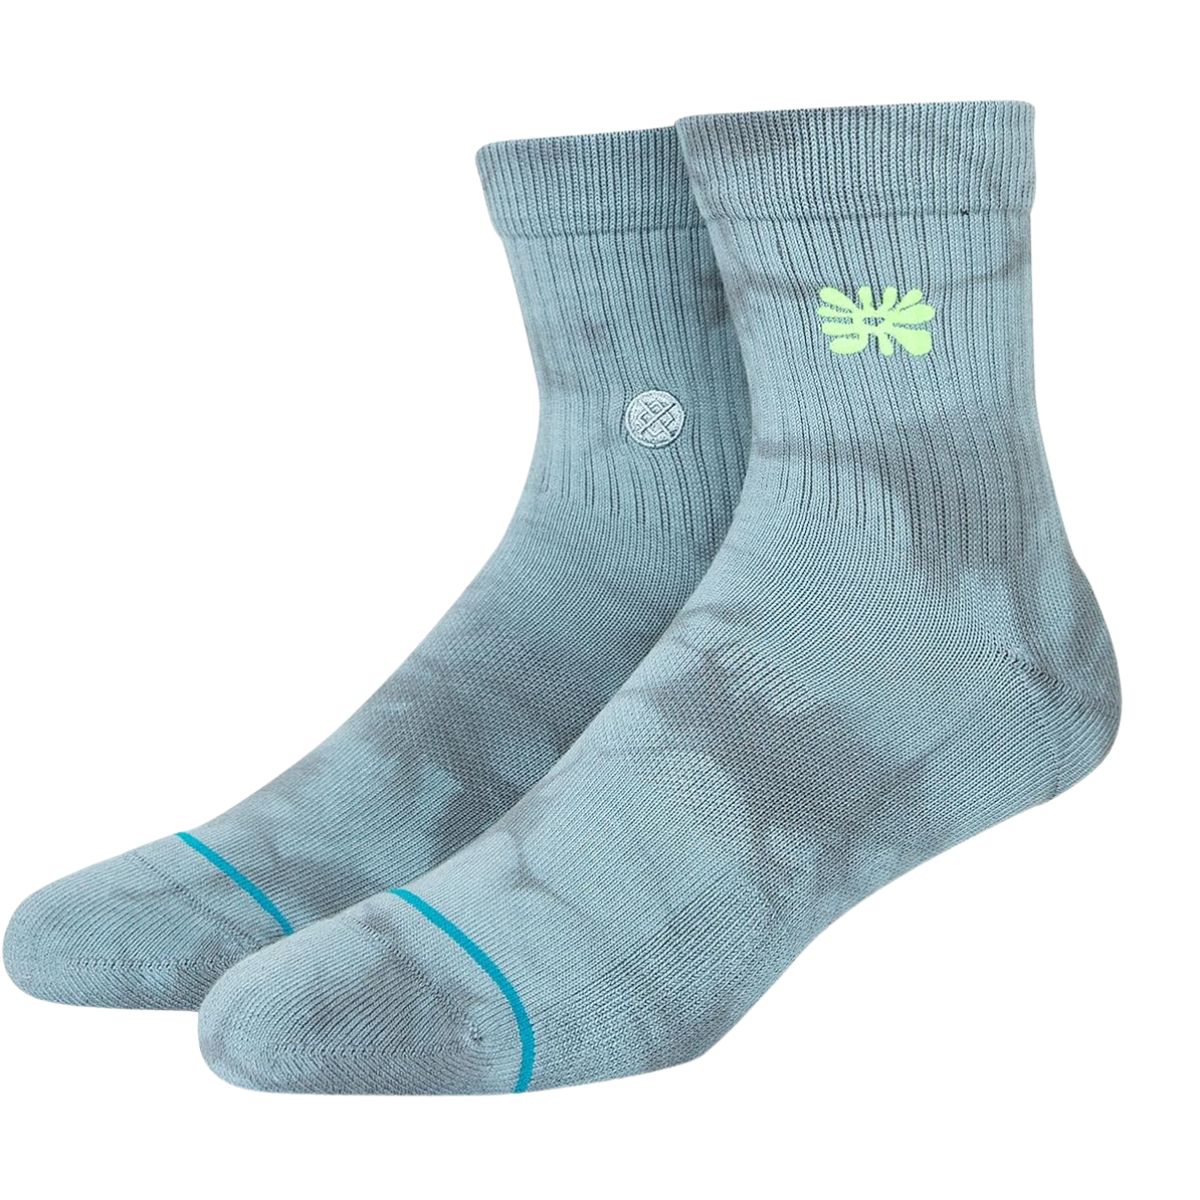 Stance Triptides Socks in Blue - BoardCo